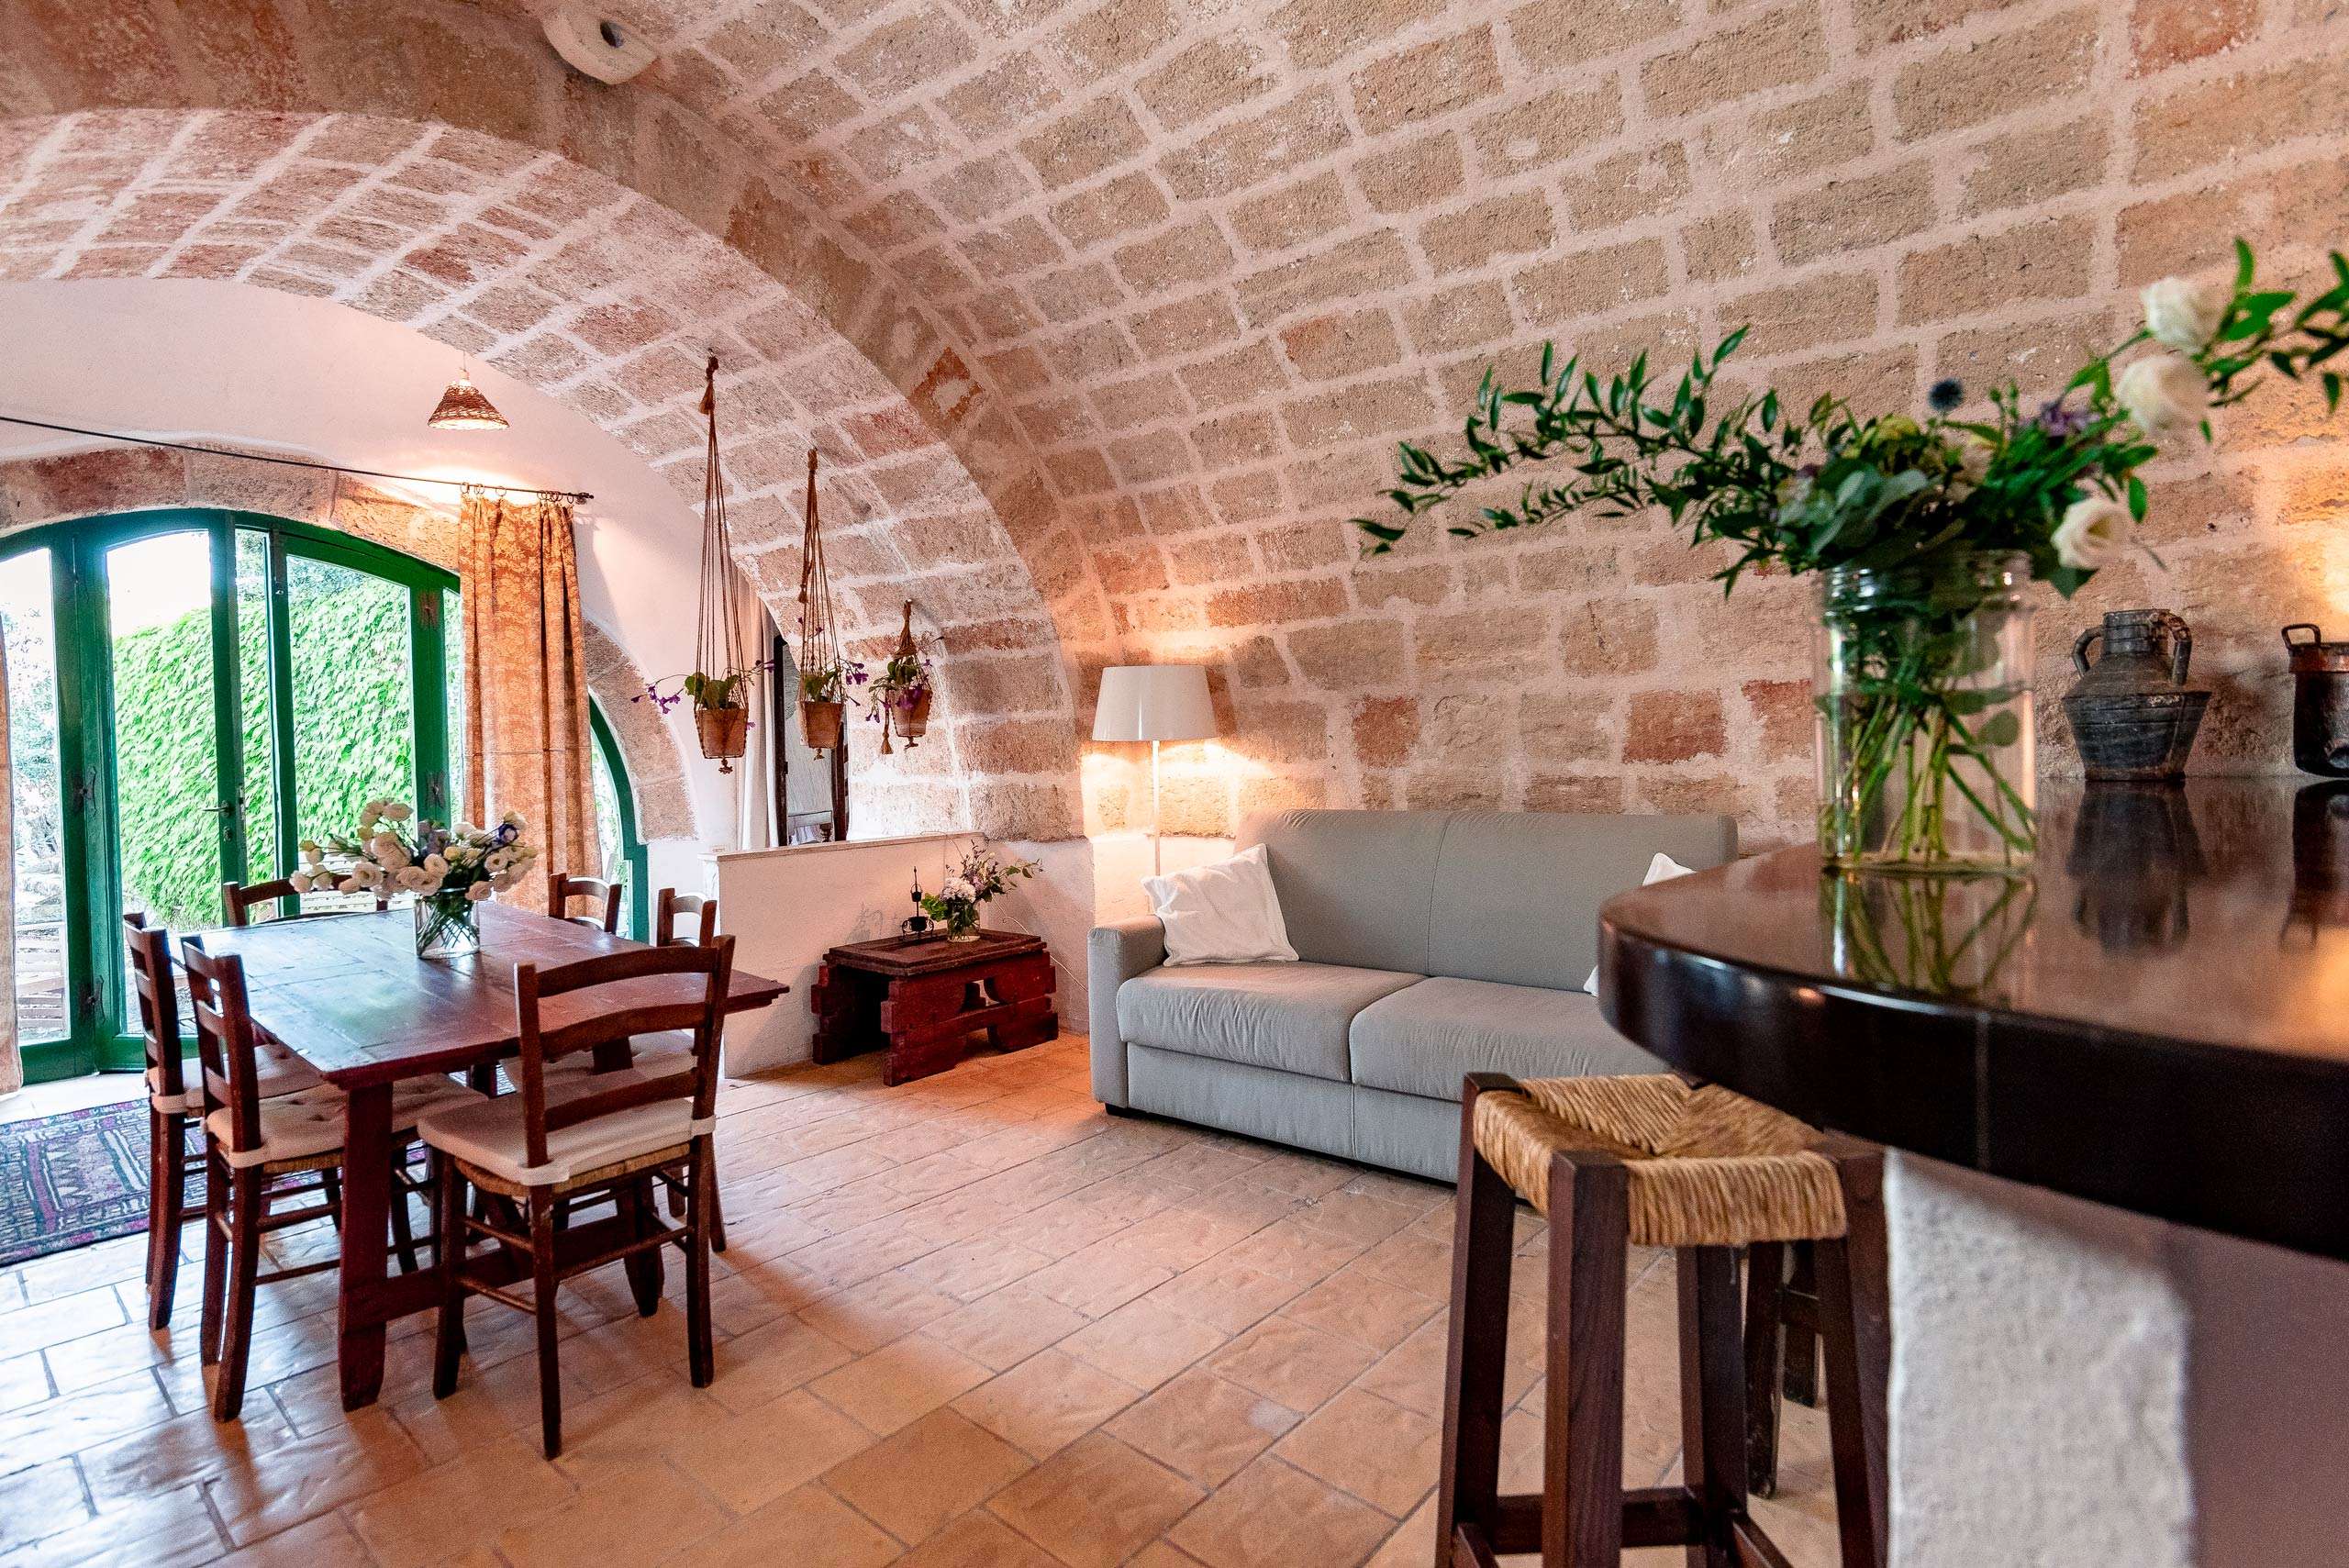 A typical living room of a masseria in Puglia, at Masseria Spina Resort